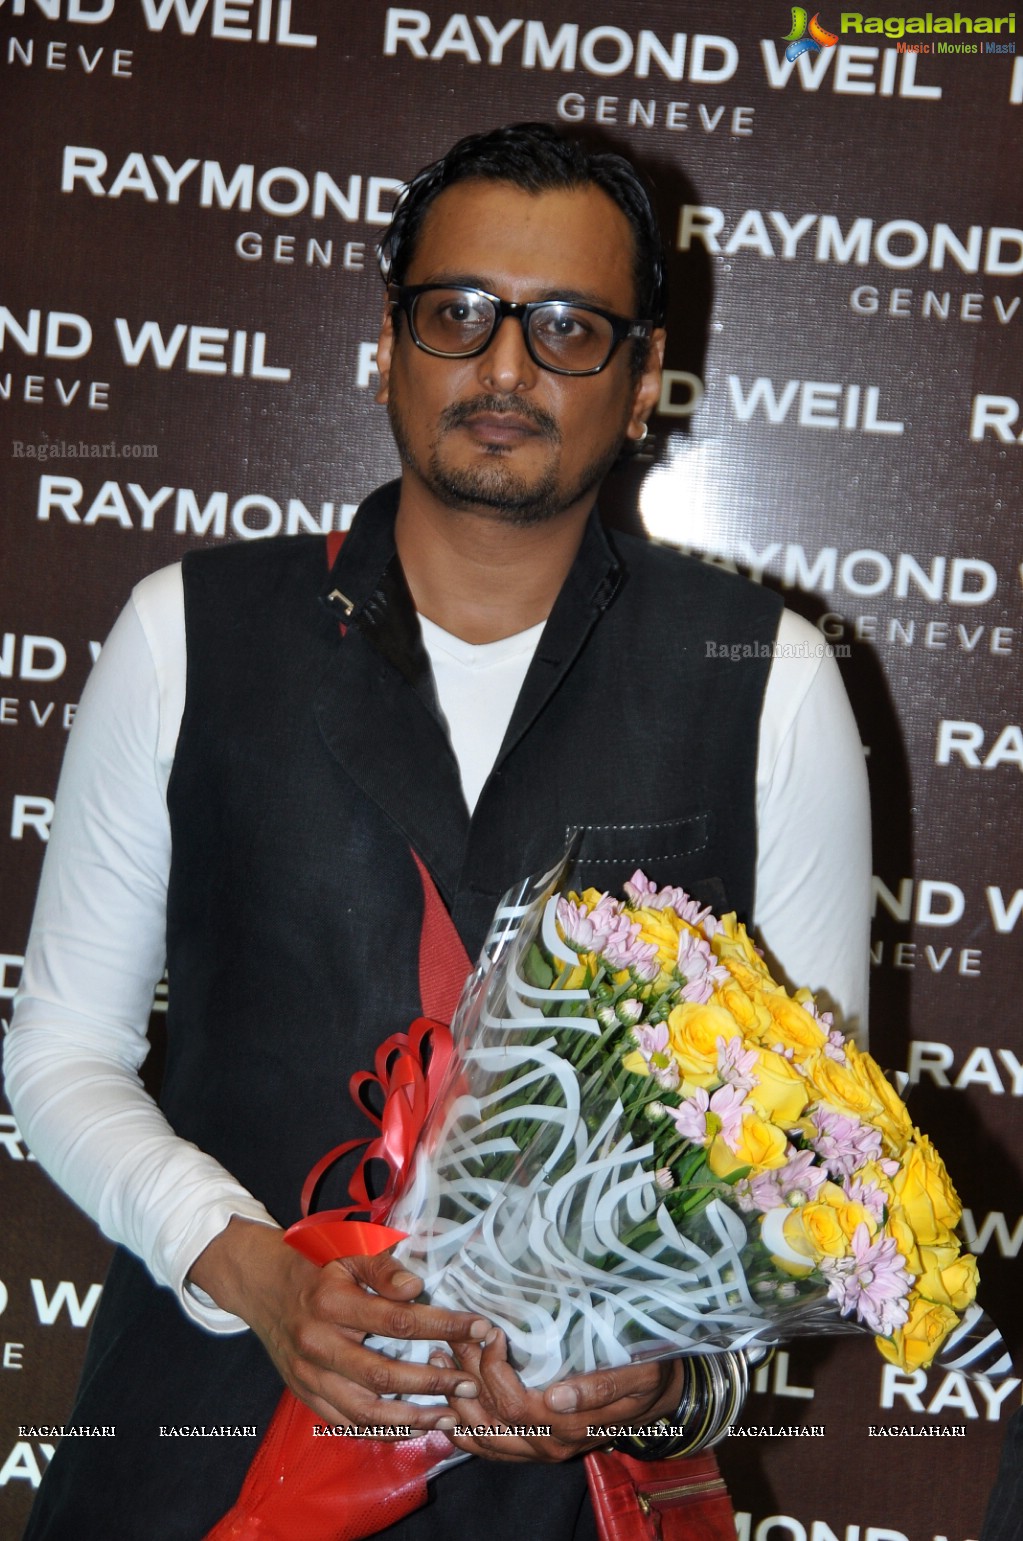 Raymond Weil Media Conference, Hyderabad